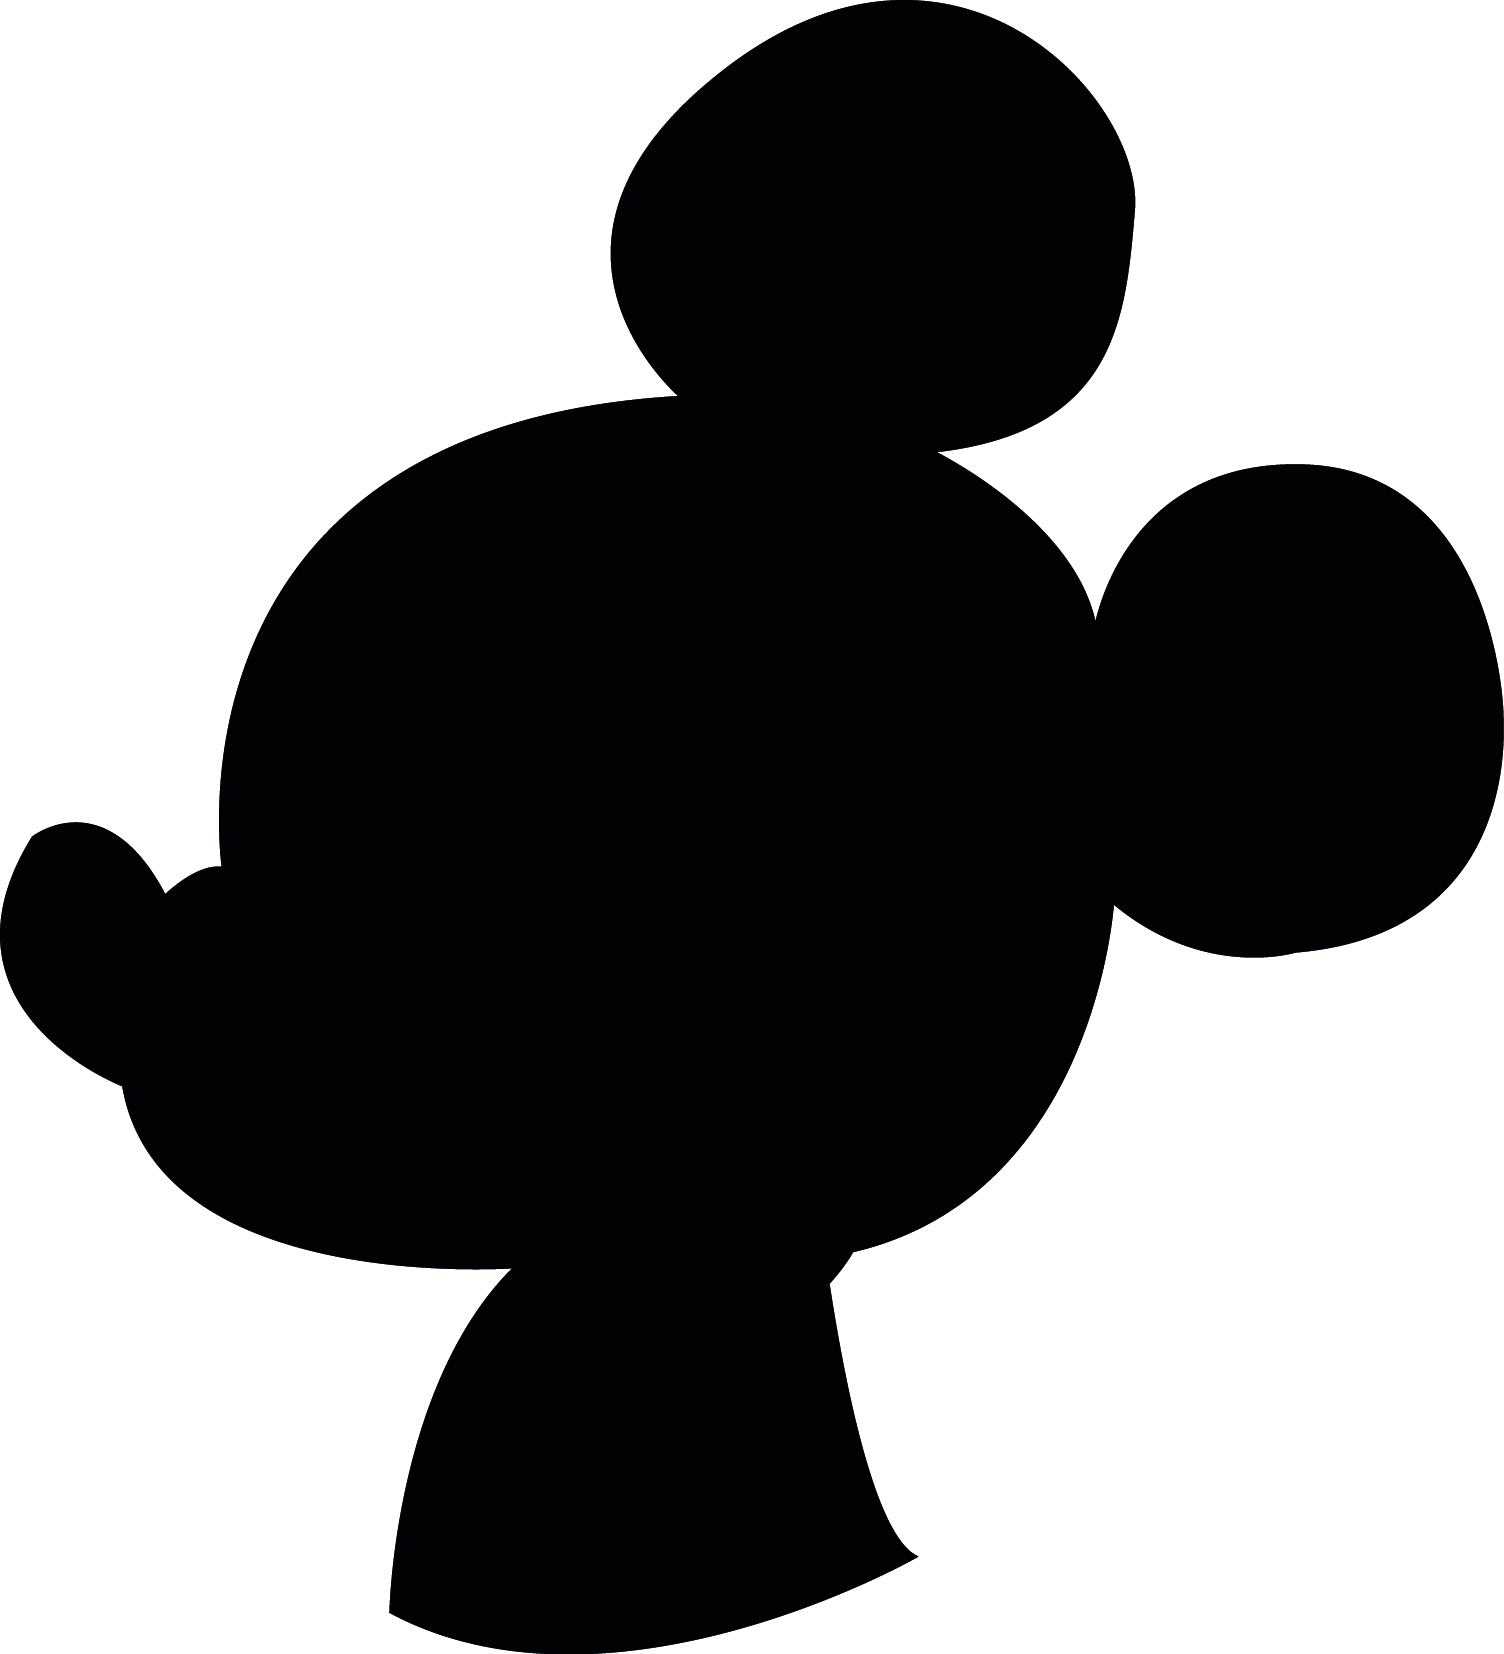 Disney Silhouette Printable at GetDrawings | Free download